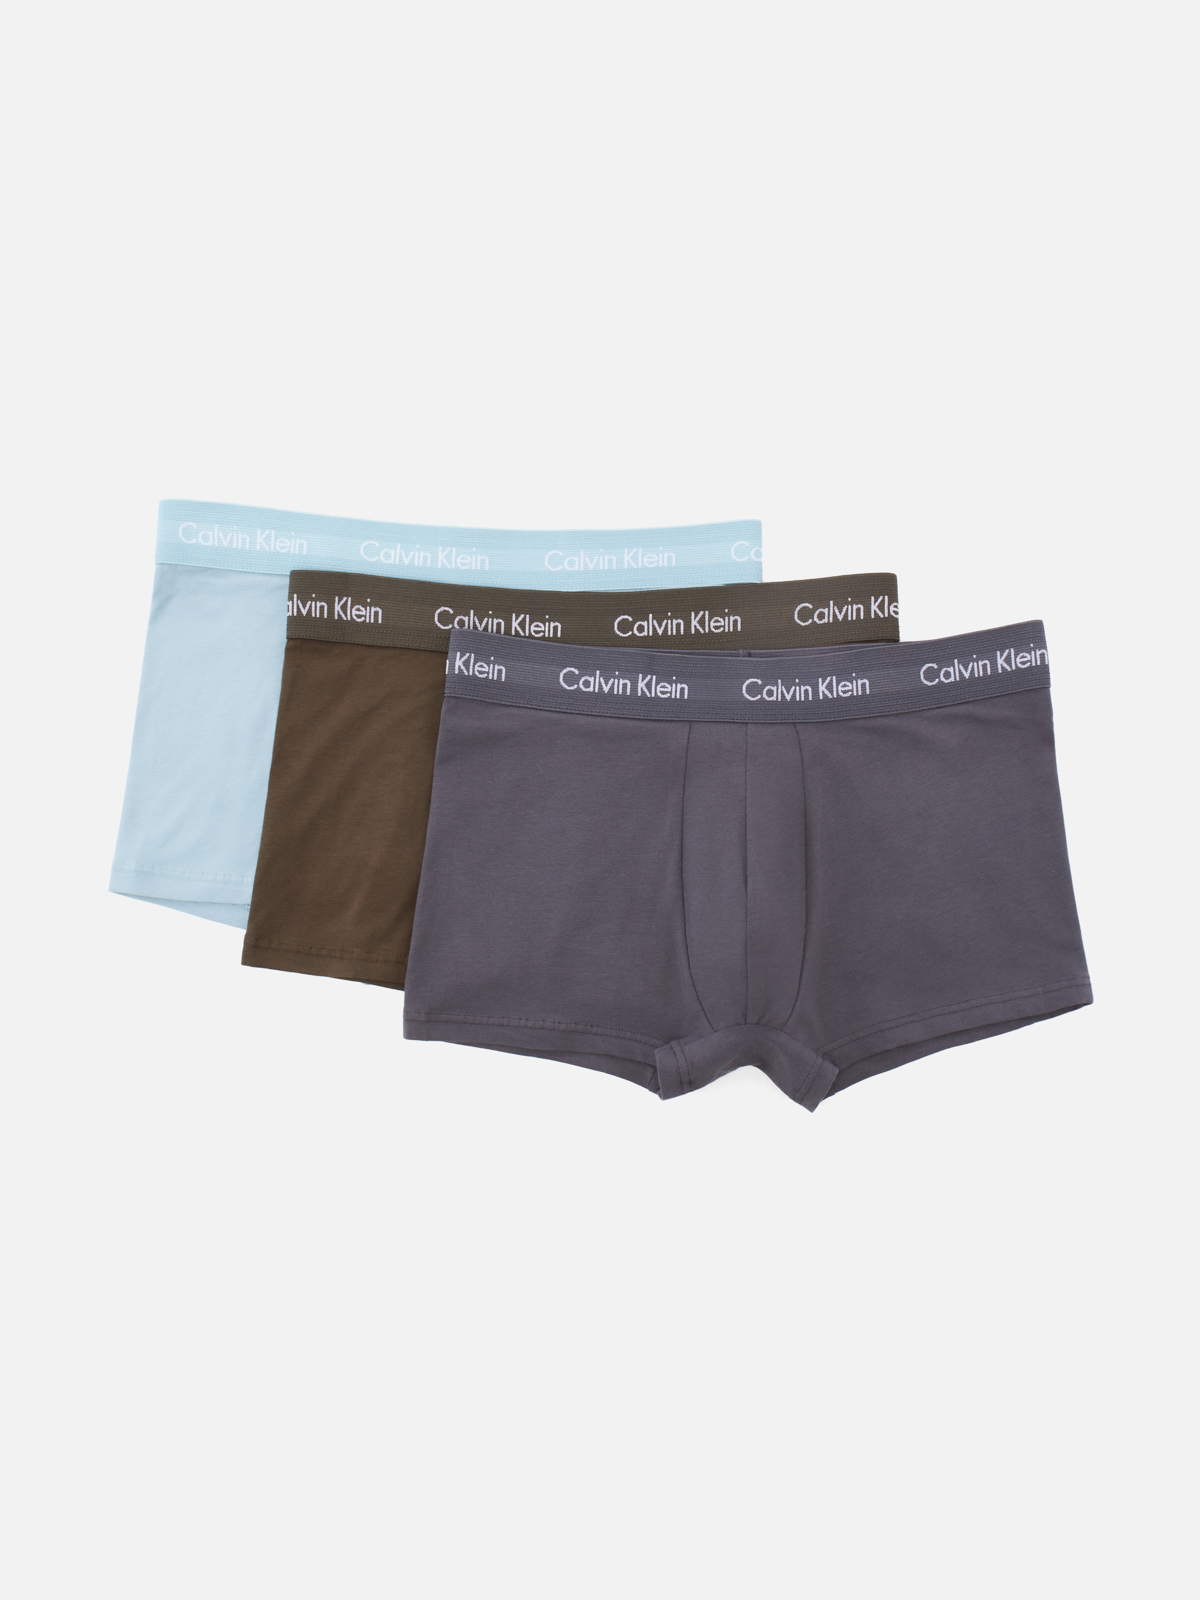 Комплект белья Calvin Klein для мужчин, grey, tourmaline, olive, размер L, Sleek